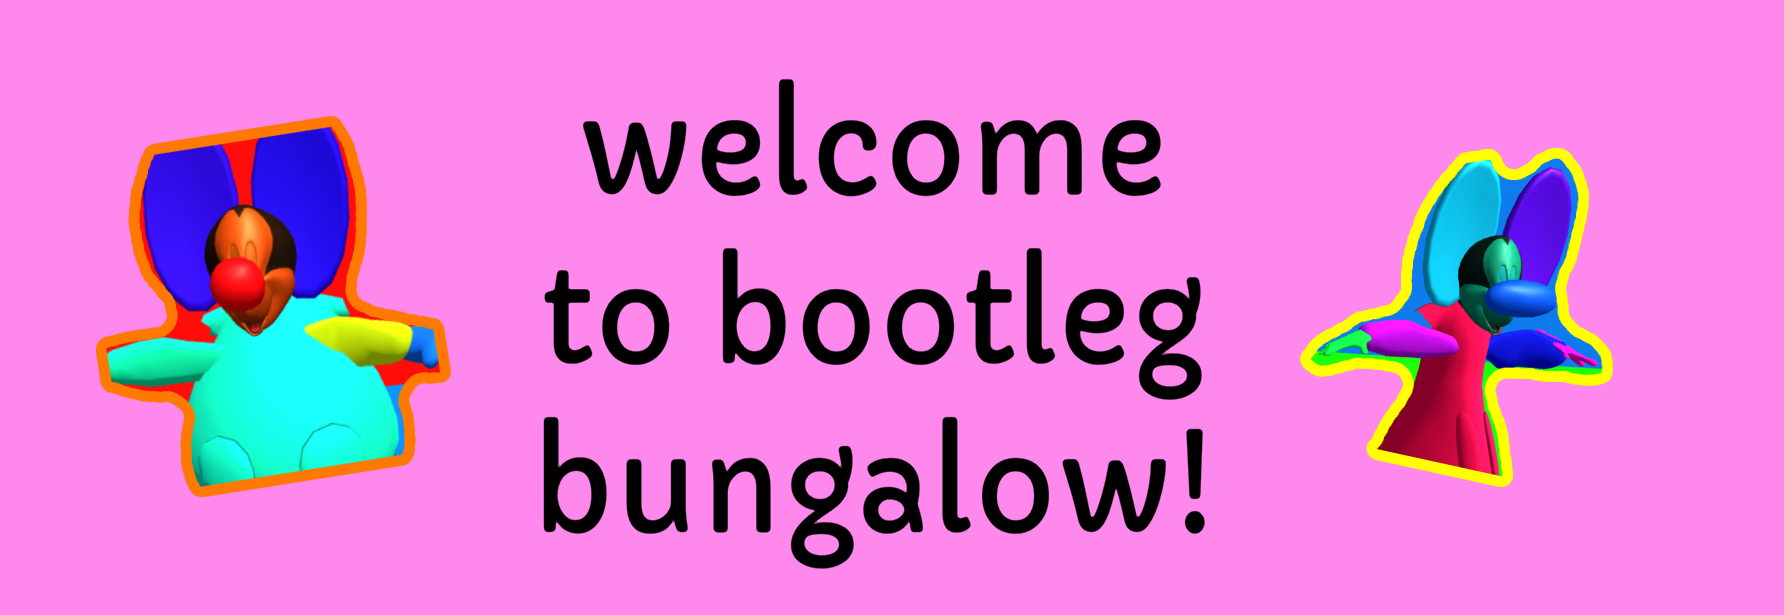 Bootleg Bungalow